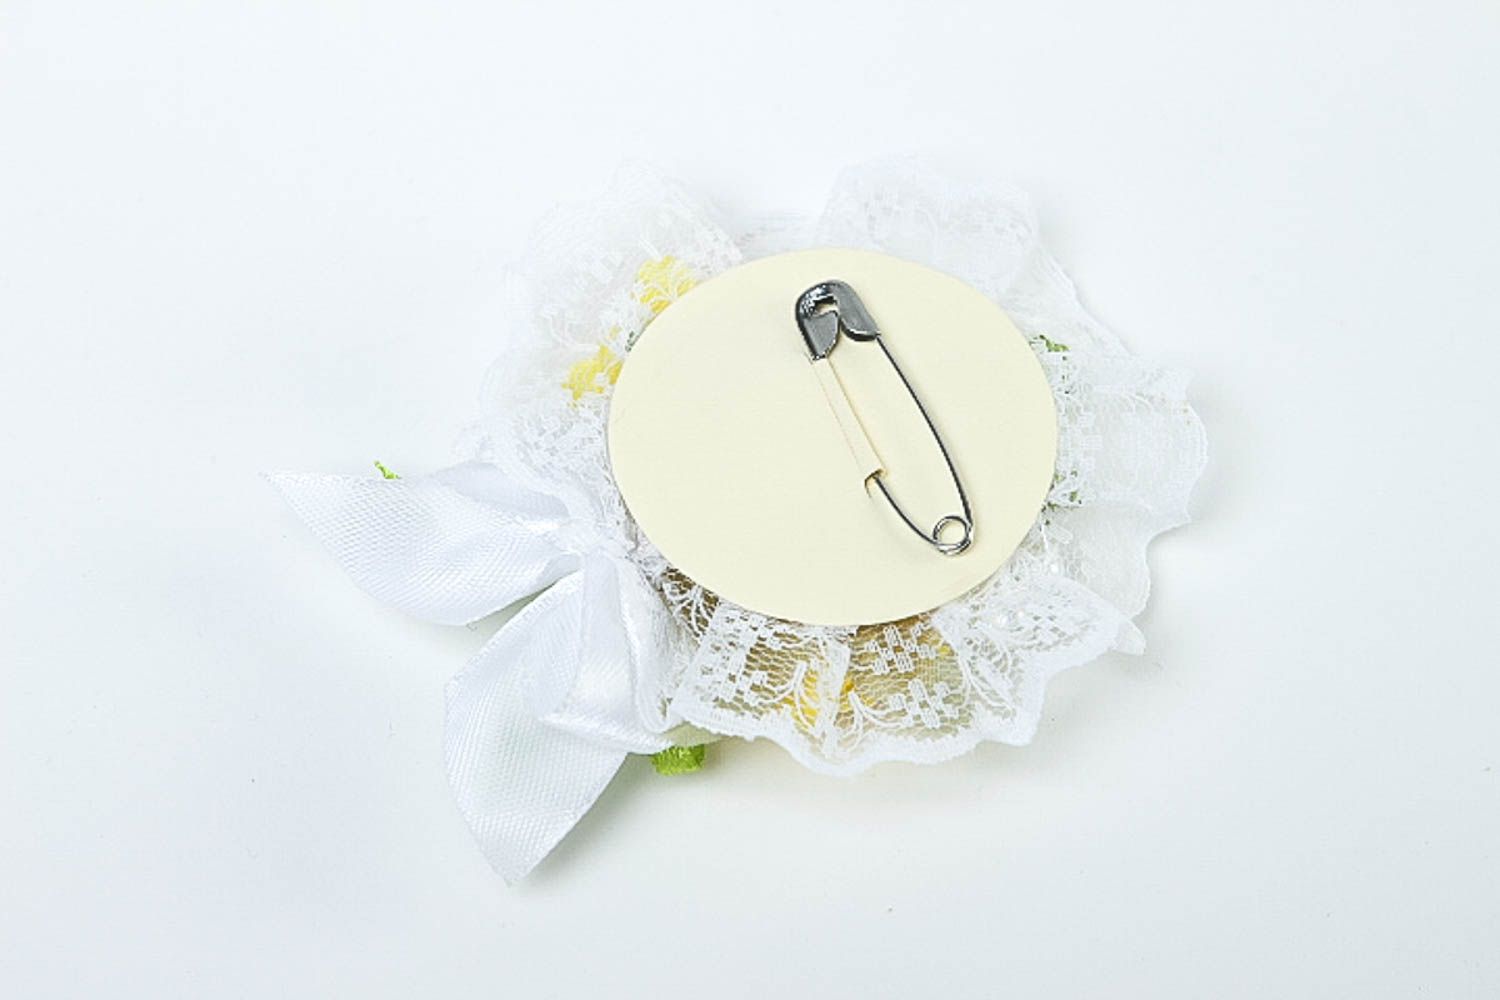 Handmade groom boutonniere wedding accessories ideas wedding attributes photo 4